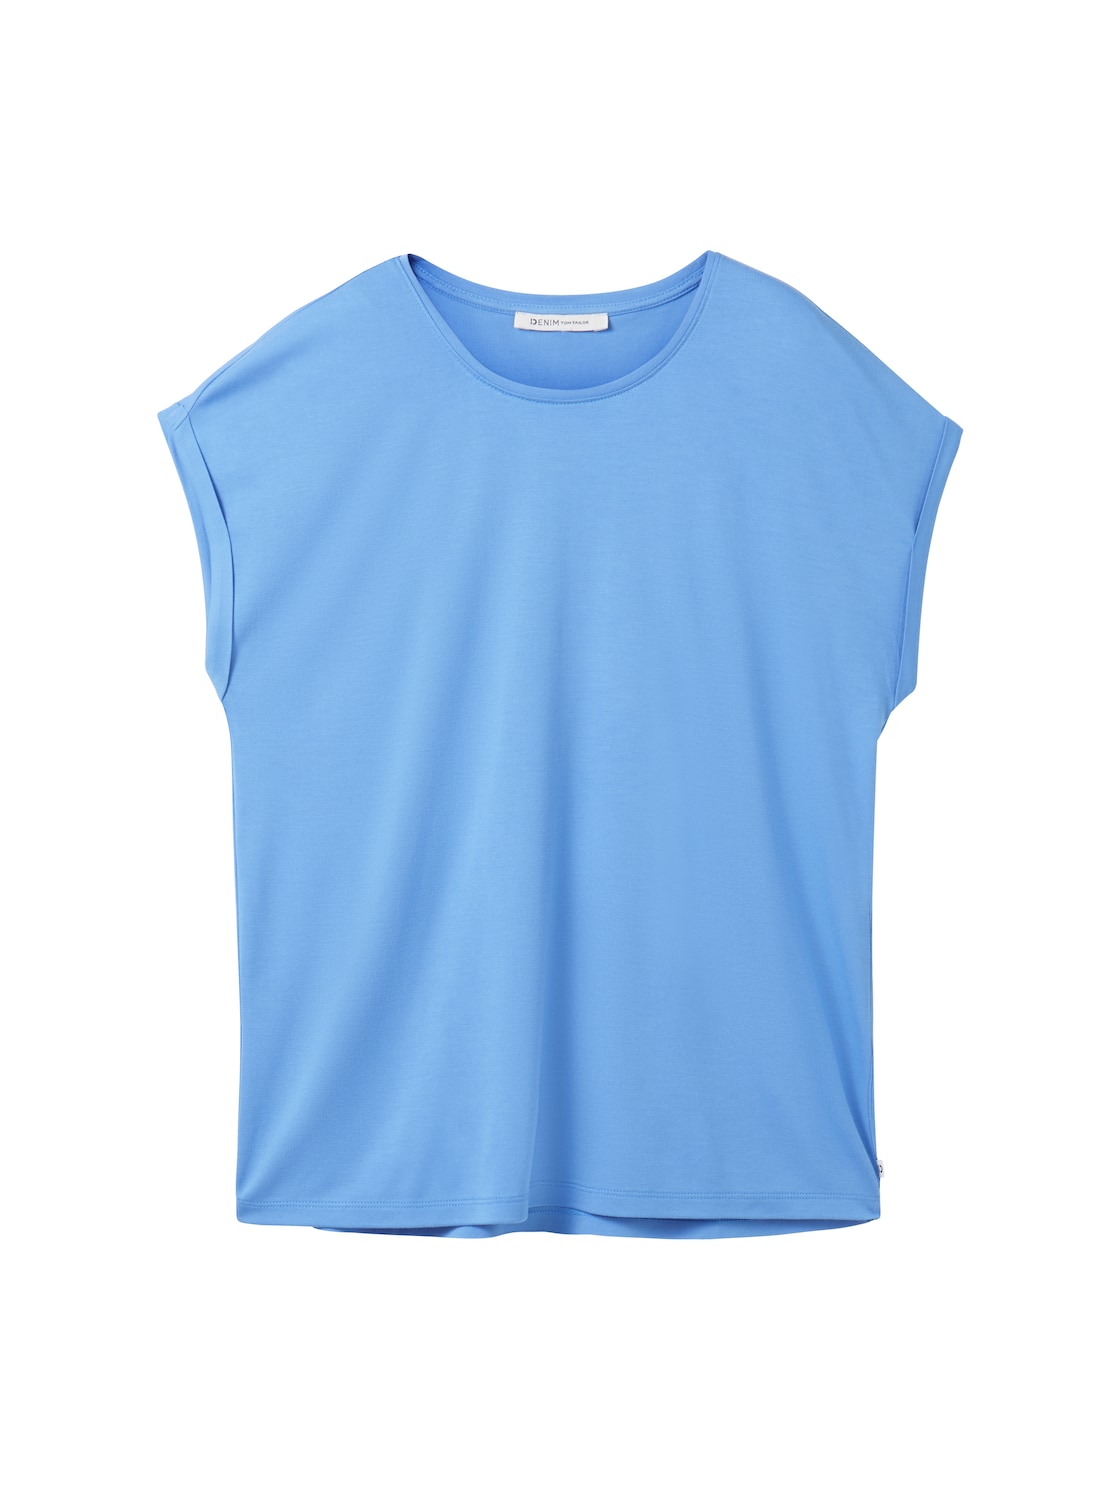 TOM TAILOR DENIM Damen Basic T-Shirt, blau, Gr. M von Tom Tailor Denim